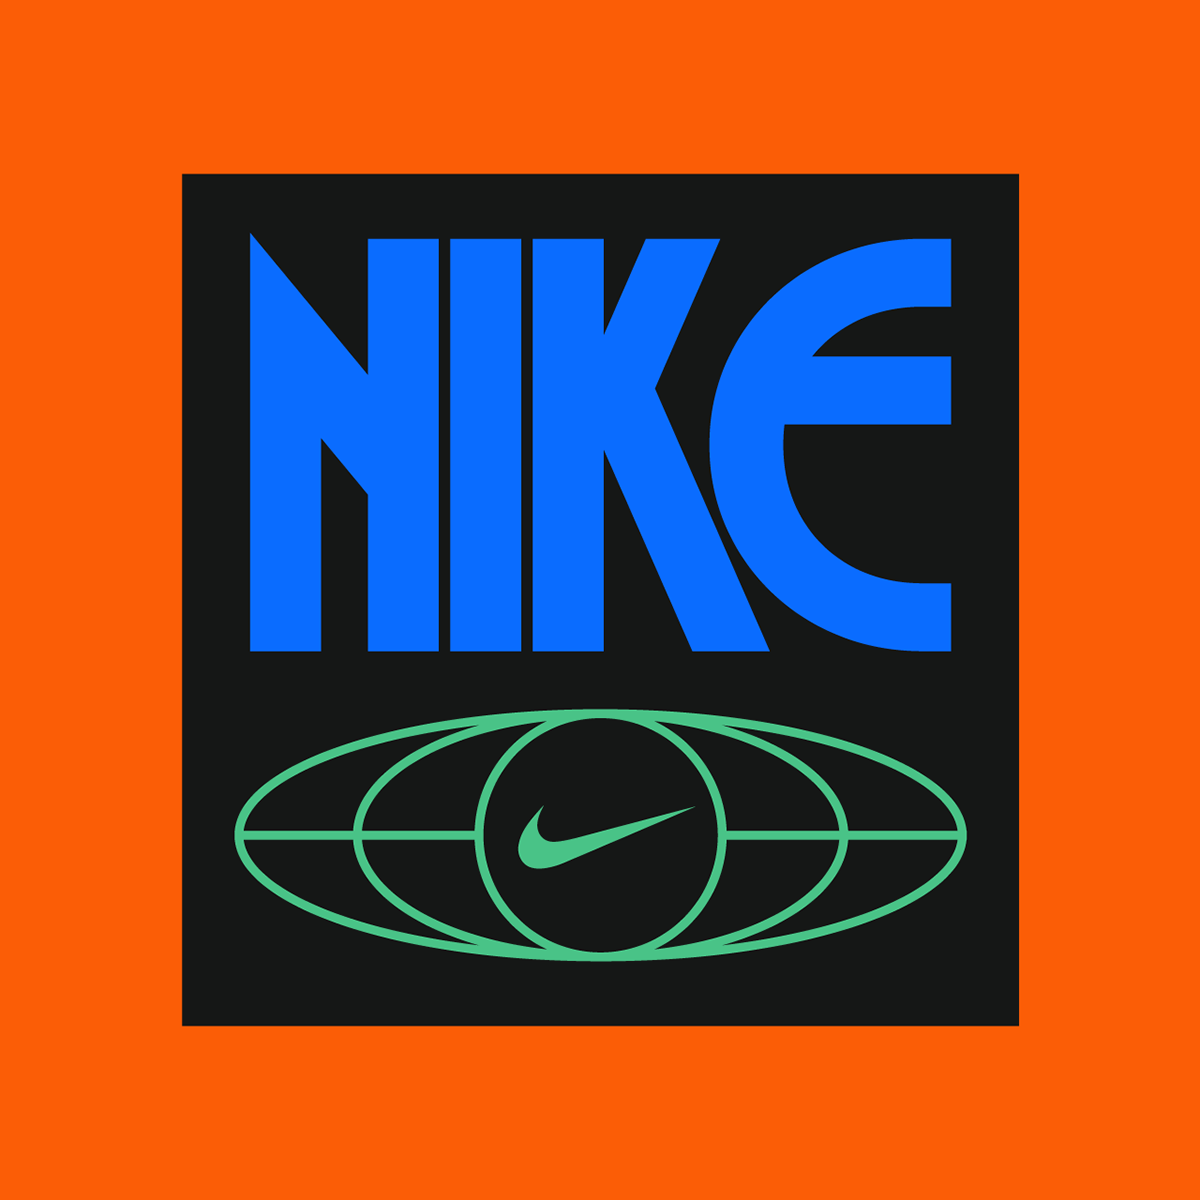 Nike Netflix 1984 george orwell nasa atari spotify the shining playstation LEGO Maythe4thbewithyou